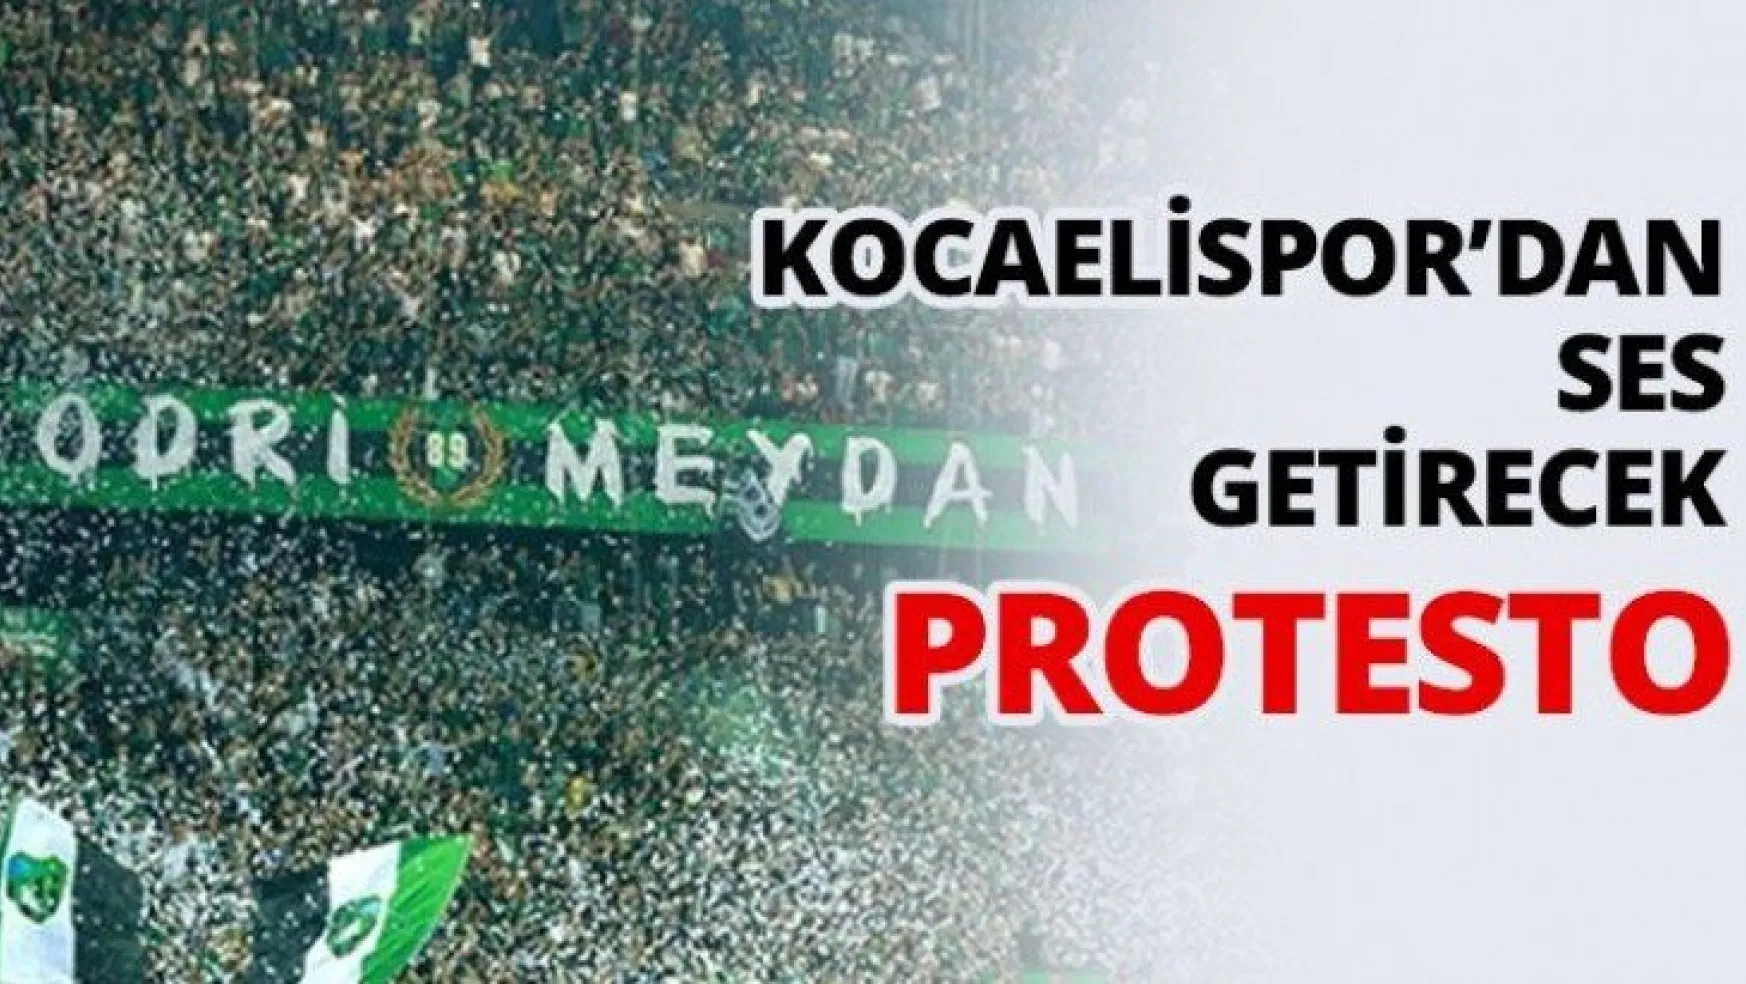 Kocaelispor'dan ses getirecek protesto